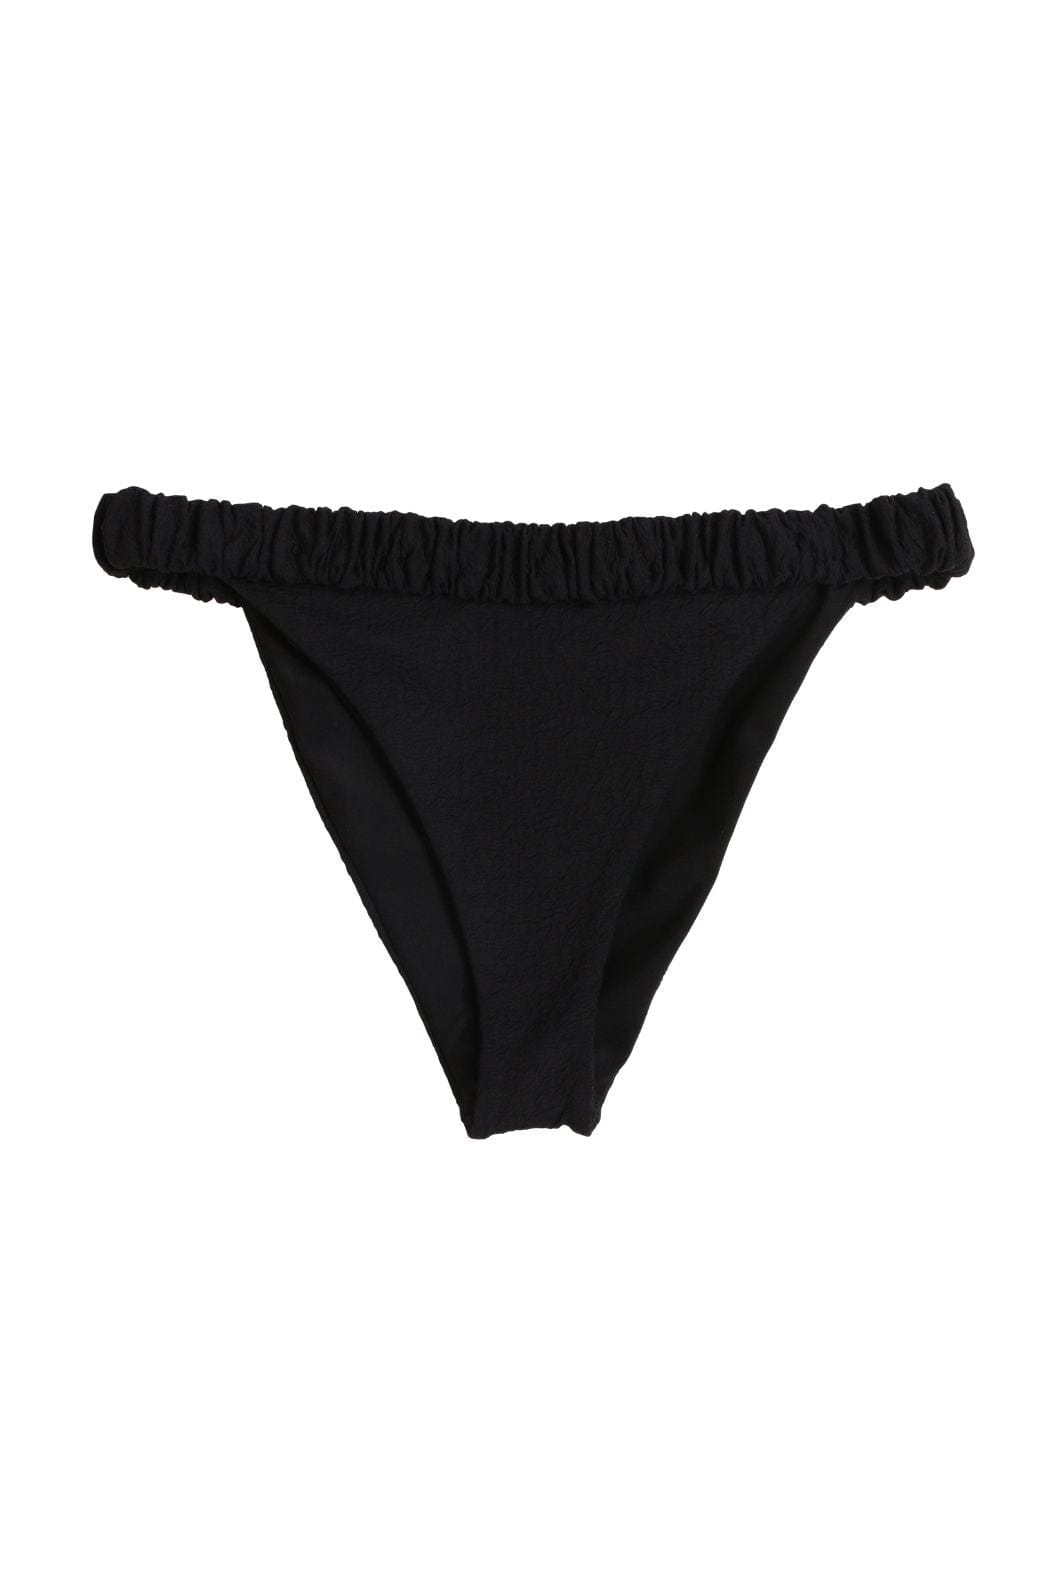 Undress Code Bikini Bottom Girlish Charm Bikini Bottom - Black